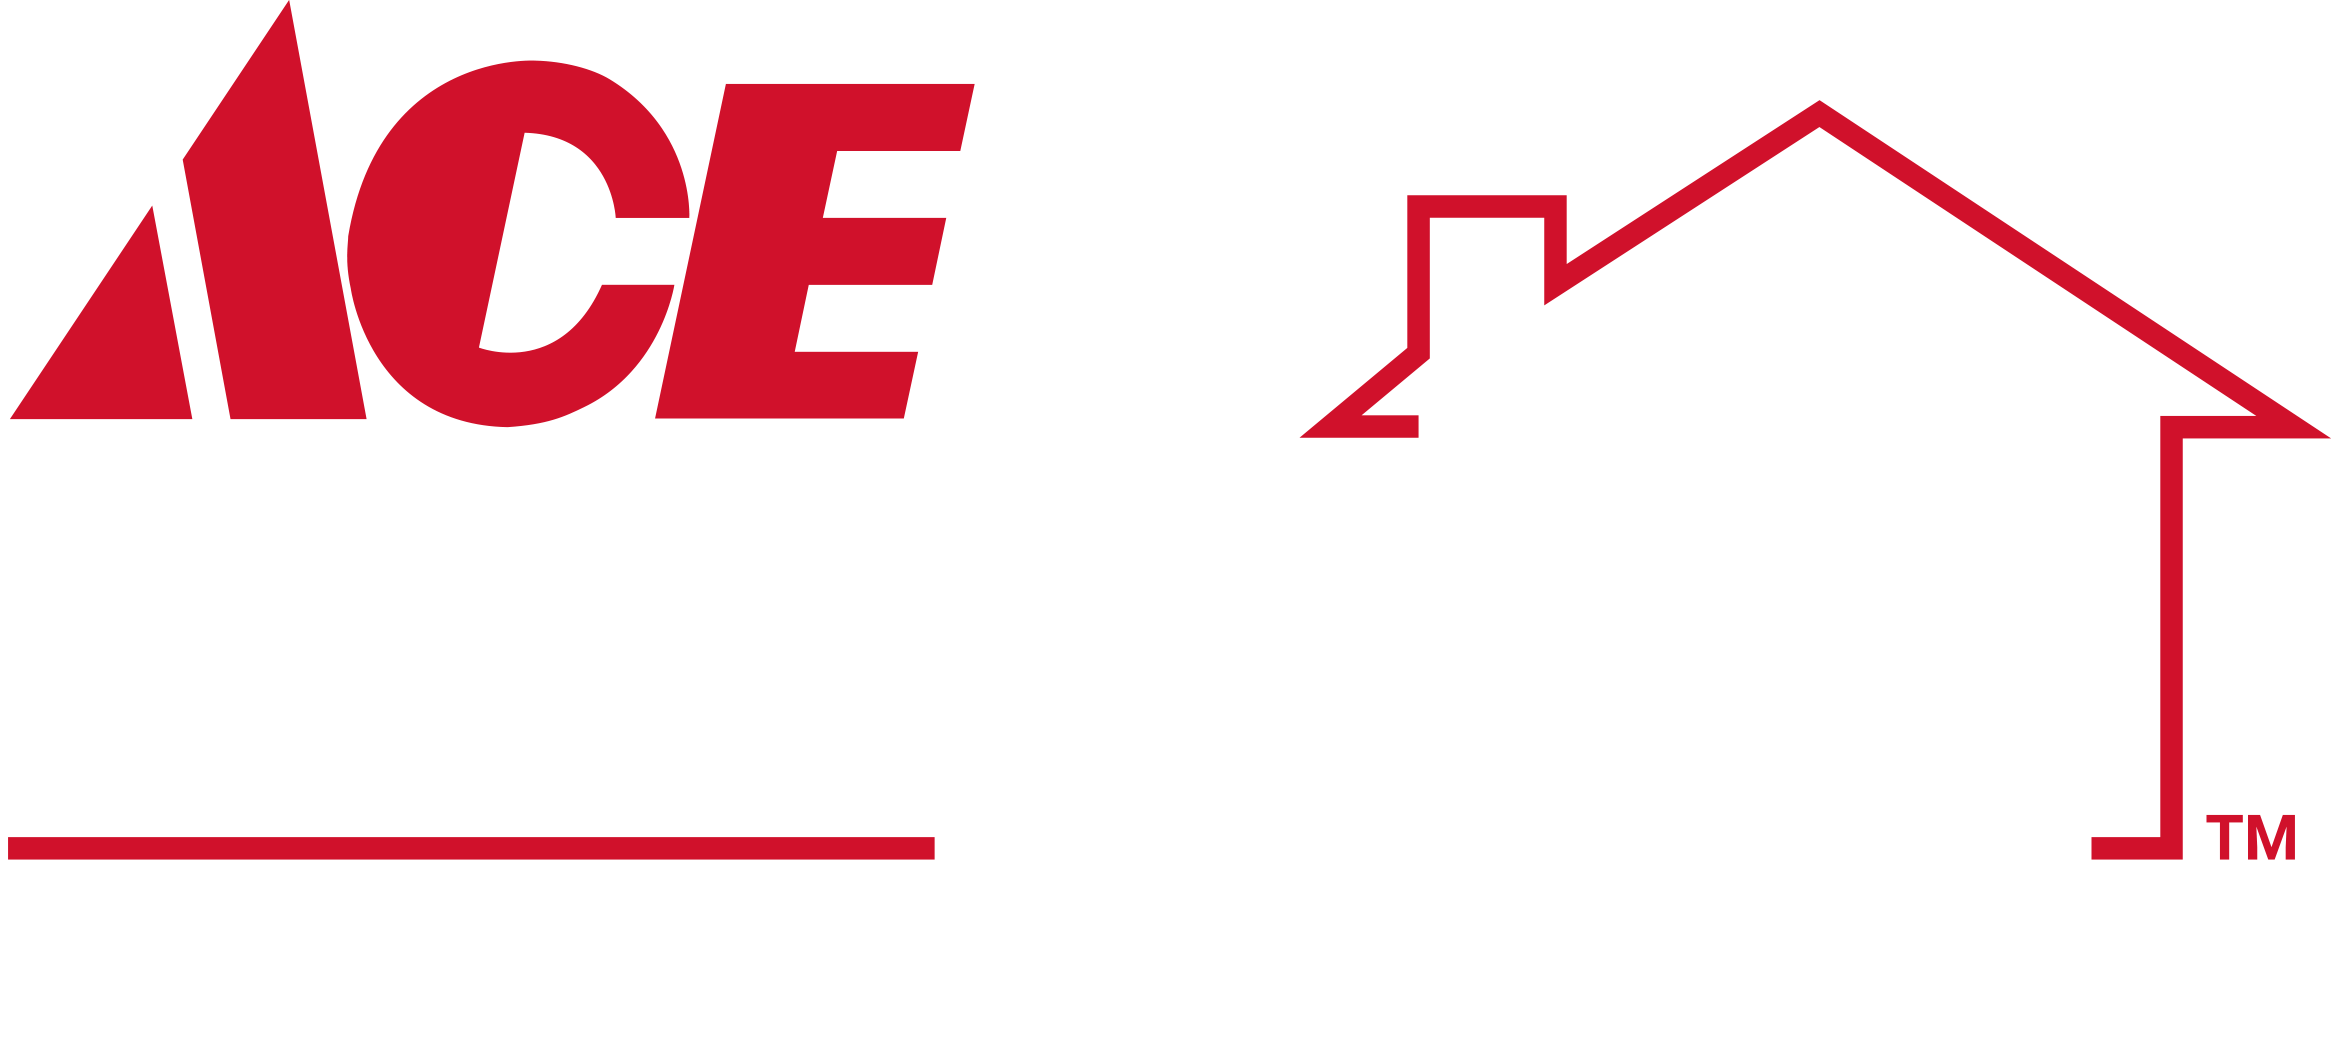 Ace Handyman Services Sumner County